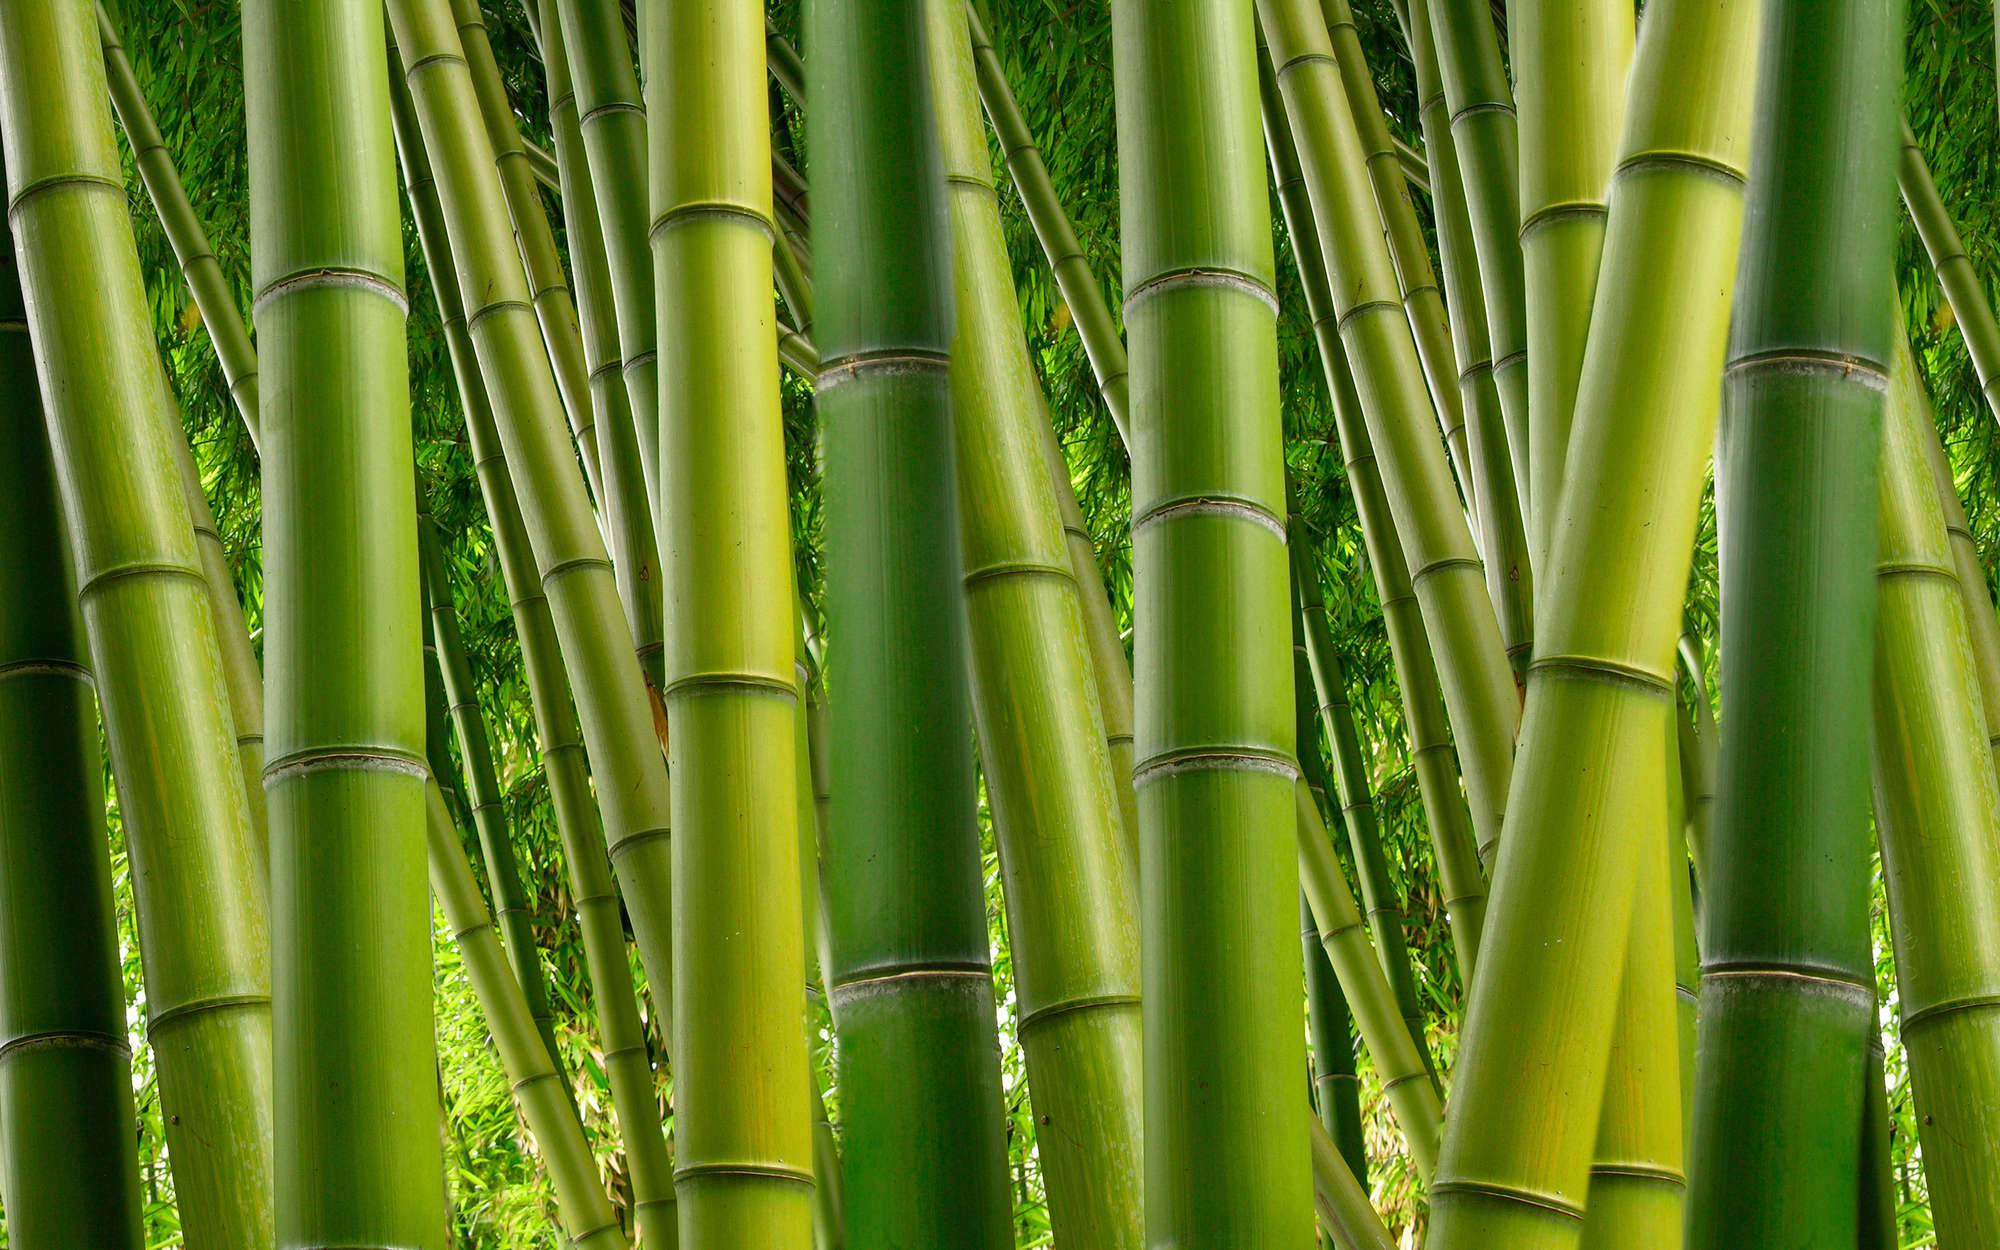             Nature Wallpaper Bamboo in Green - Matt Smooth Non-woven
        